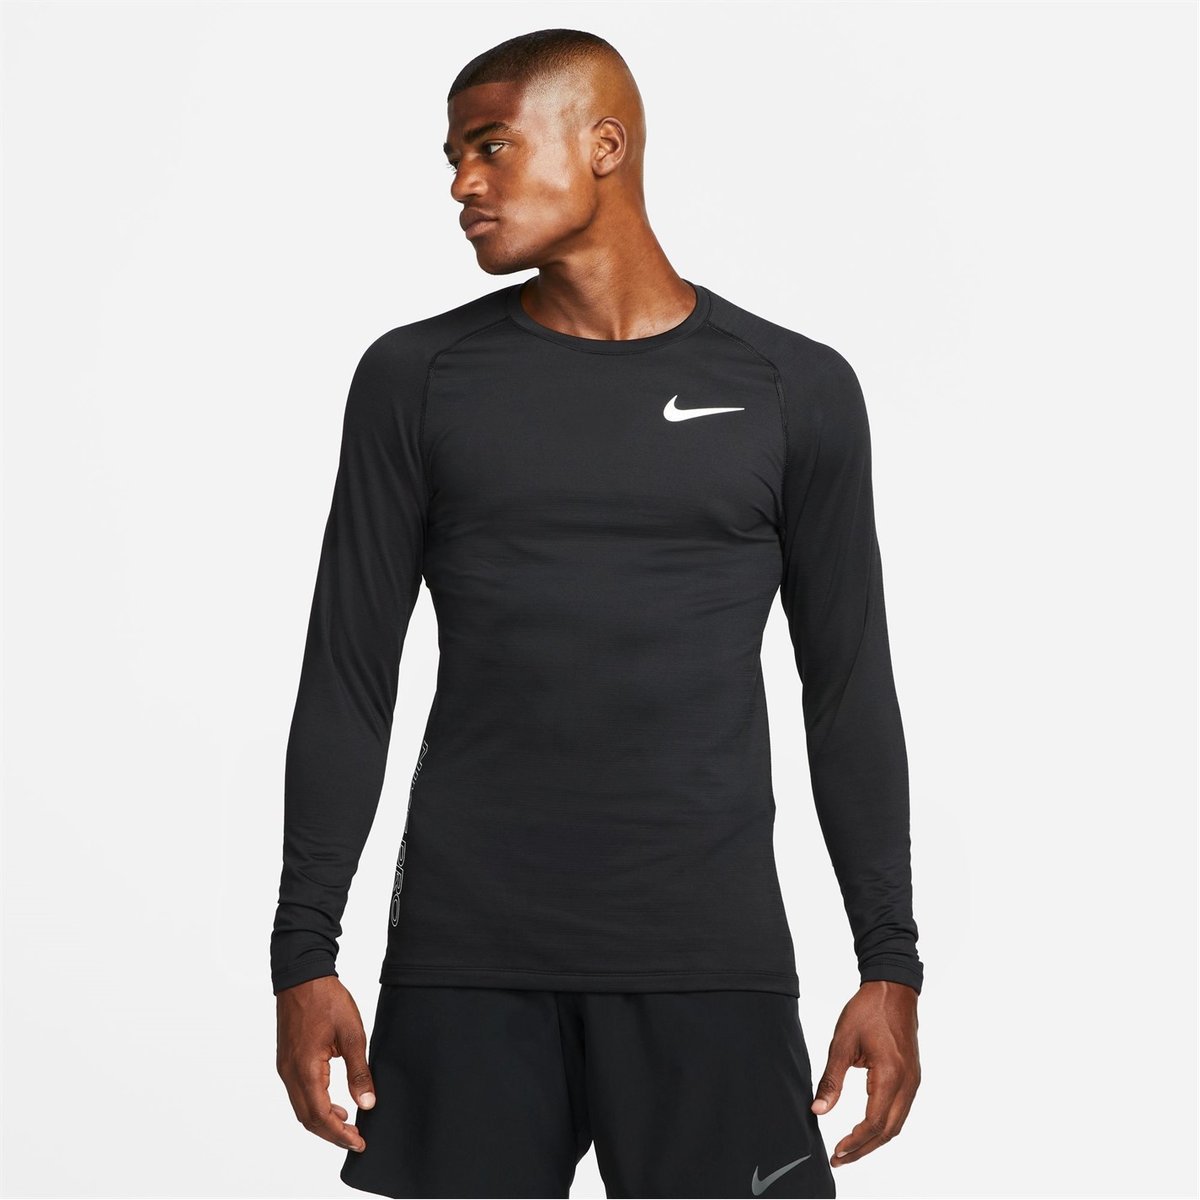 Nike Mens Running Clothing - Sweatshop